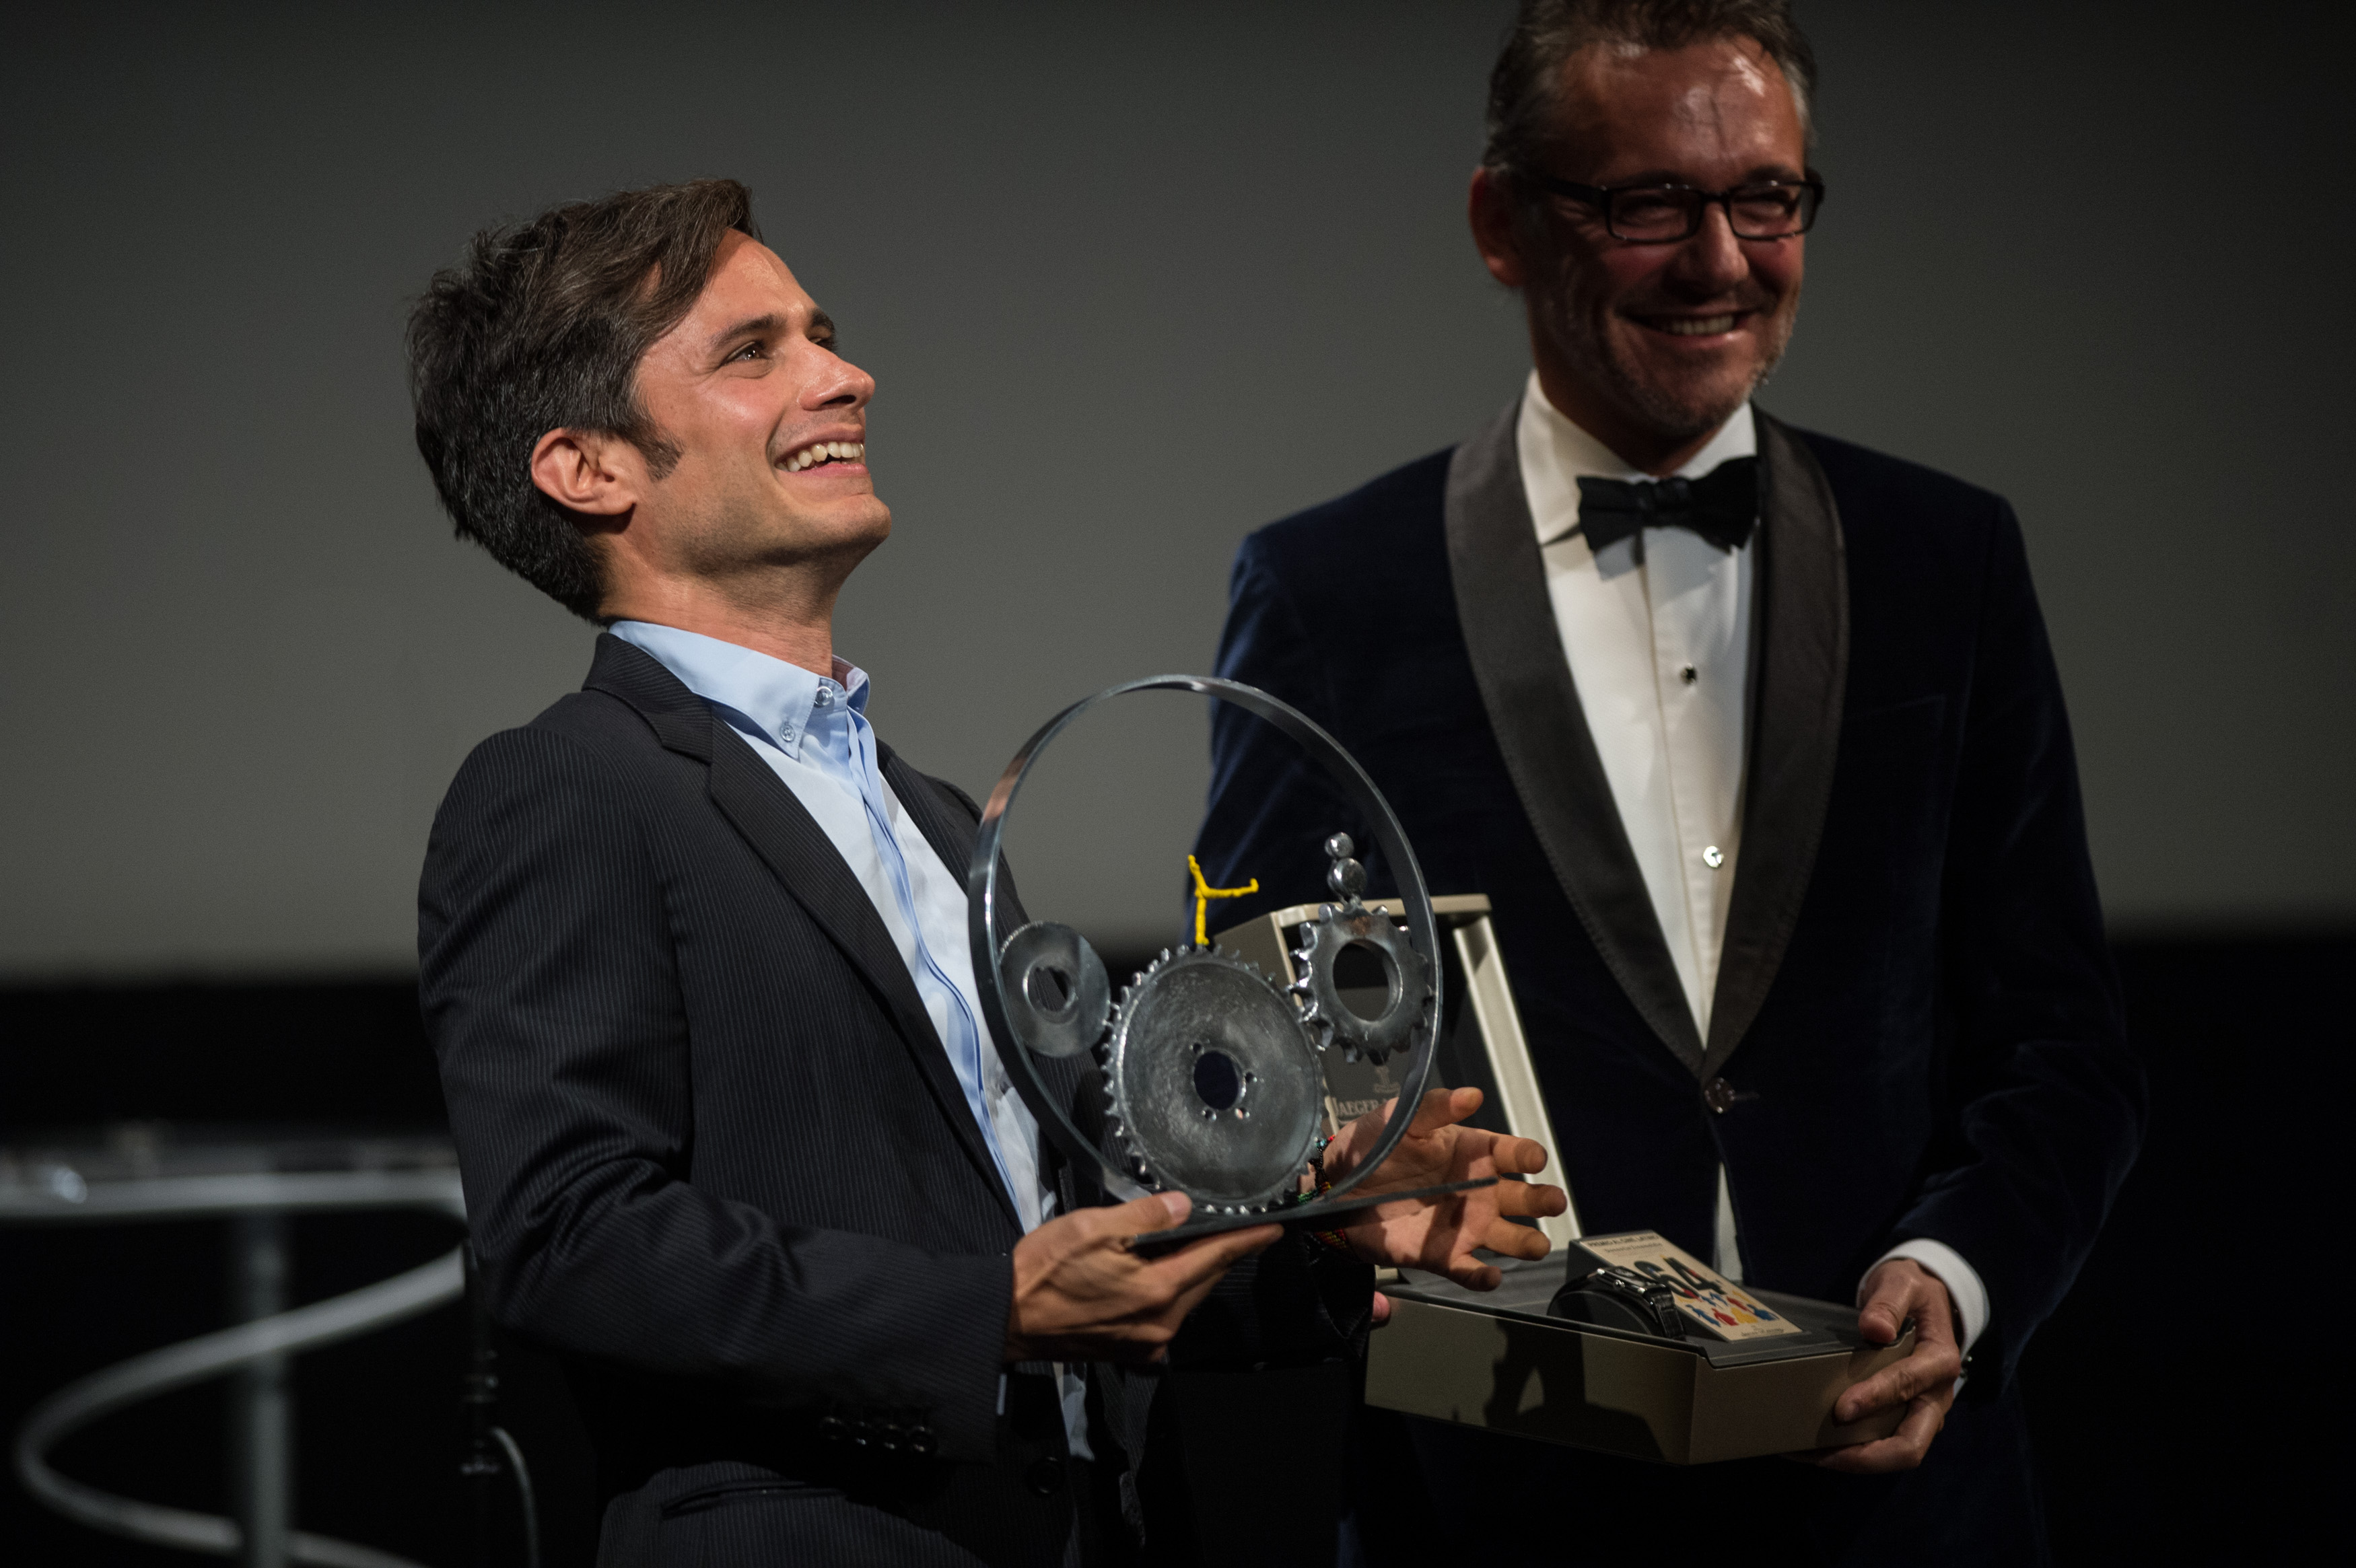 Gael Garcia Bernal receives the Jaeger-LeCoultre Latin Cinema Award from Laurent Vinay, international communications director of Jaeger-LeCoultre, at Victoria Eugenia Theatre during 64th San Sebastian Film Festival on September 17, 2016 in San Sebastian, Spain...